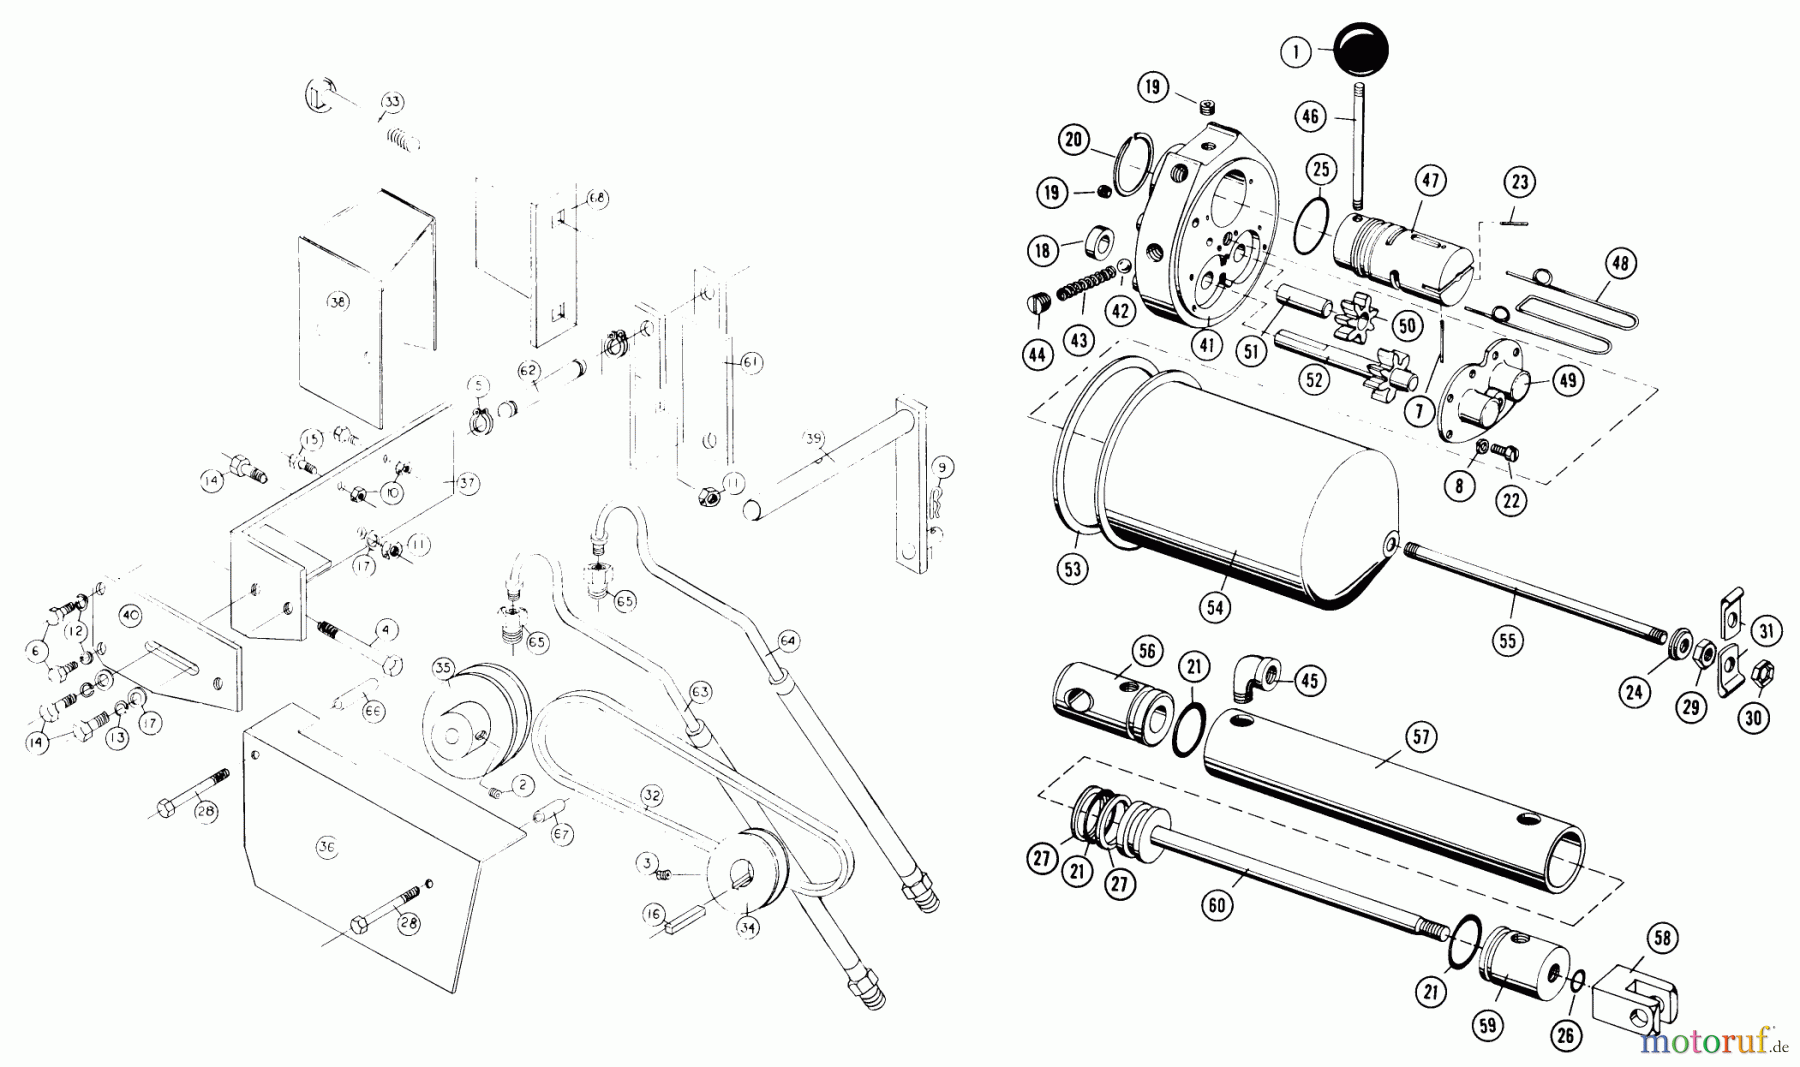  Toro Neu Accessories, Mower HL-5 - Toro Head/Tail Light Kit, 1966 REVISED PARTS LIST